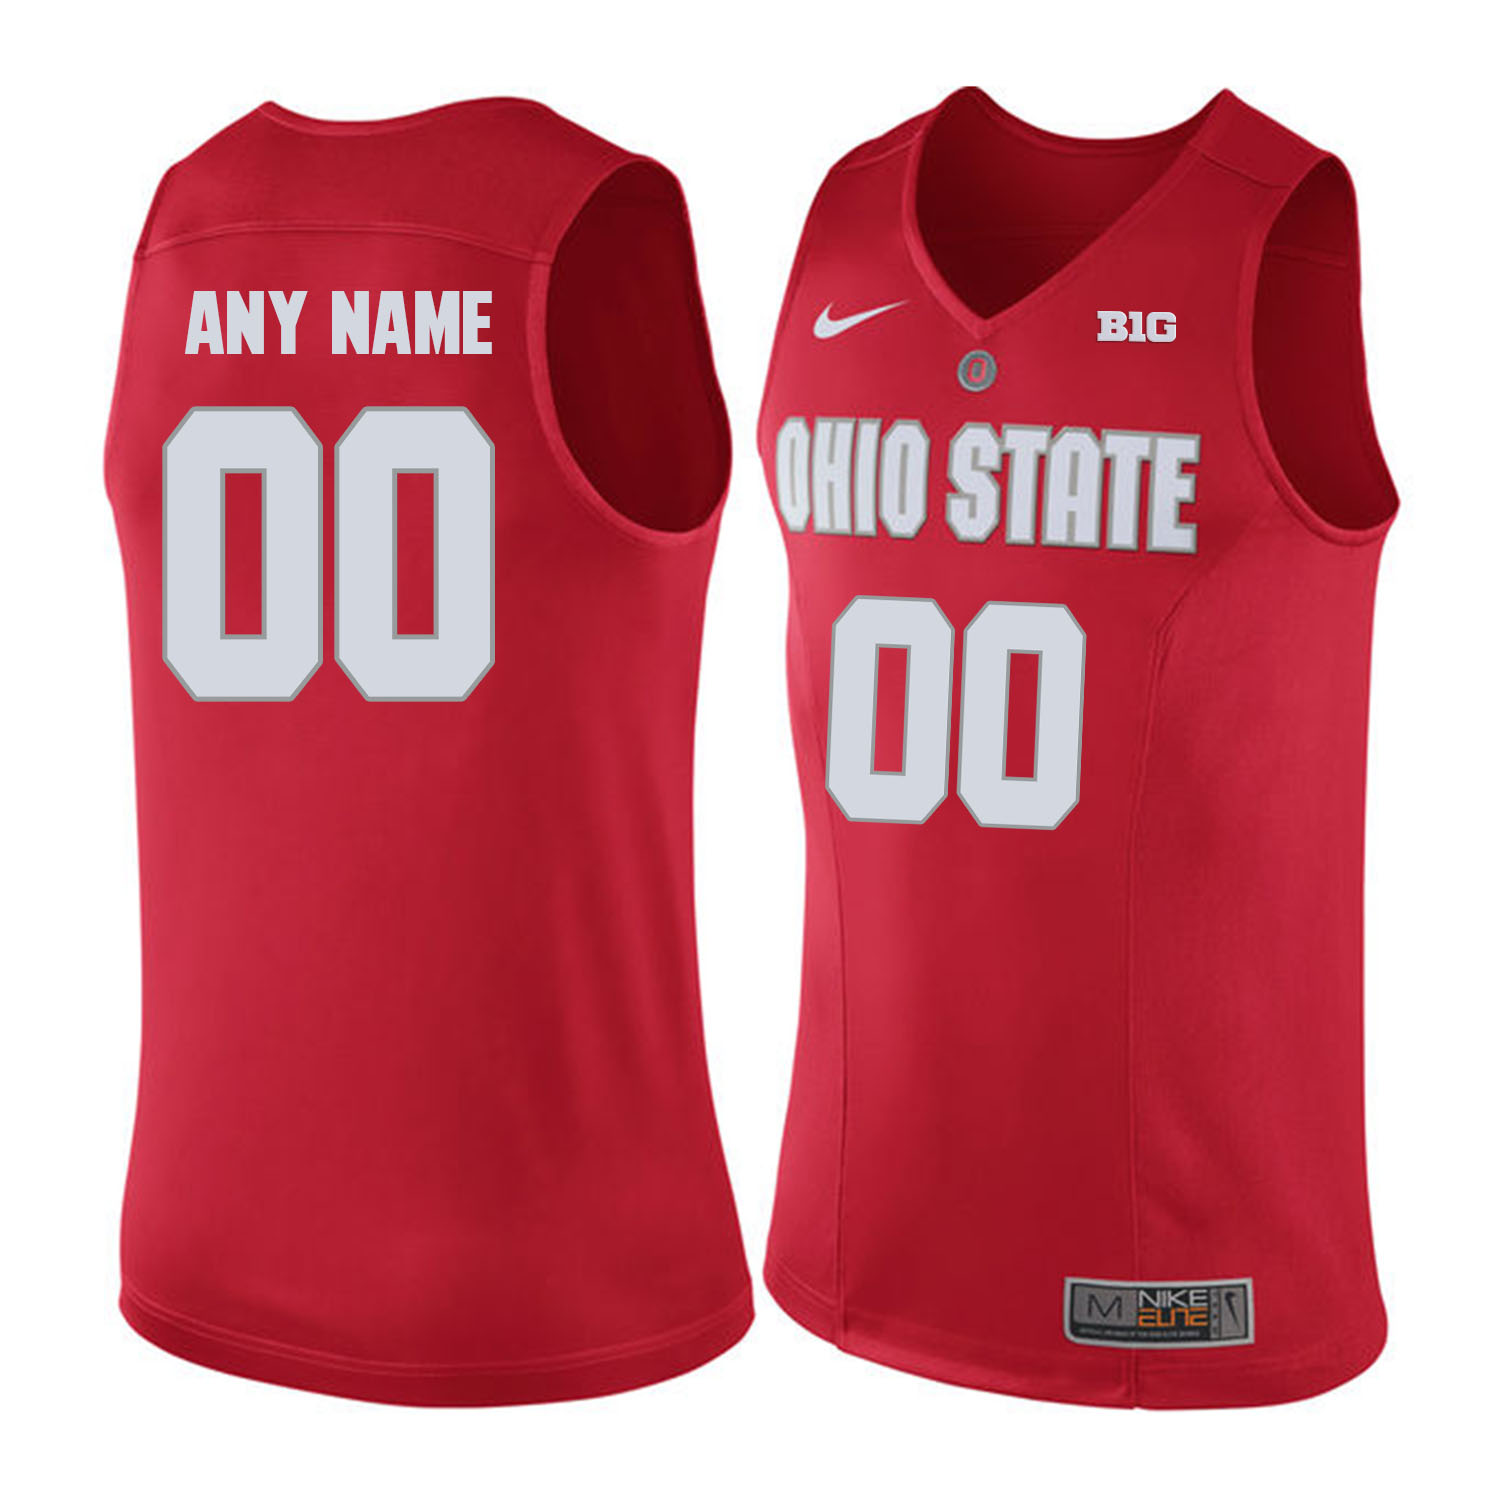 Ohio State Buckeyes Red Men's Customized Basketball Jersey